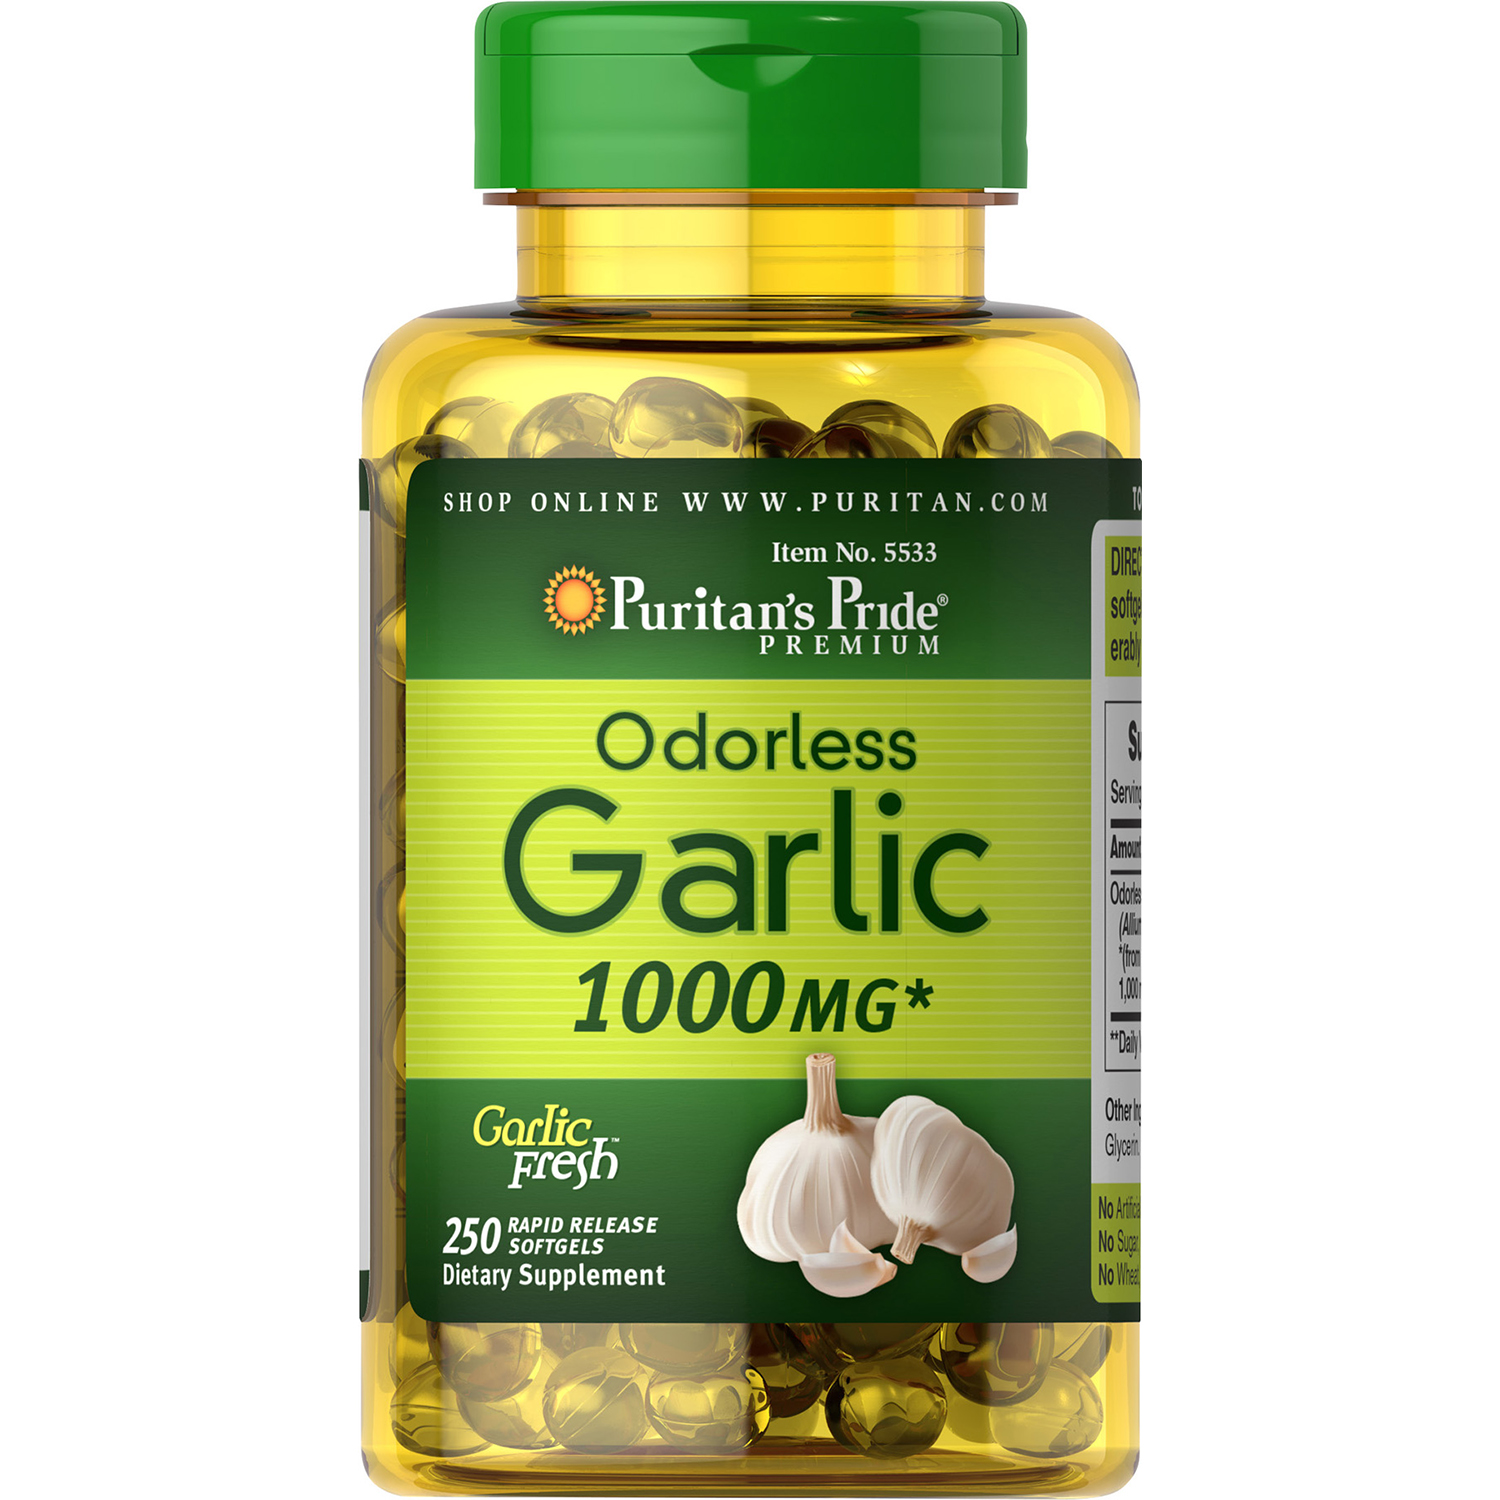 Puritan's Pride Odorless Garlic 1000 mg-250 Rapid Release Softgels - image 1 of 4